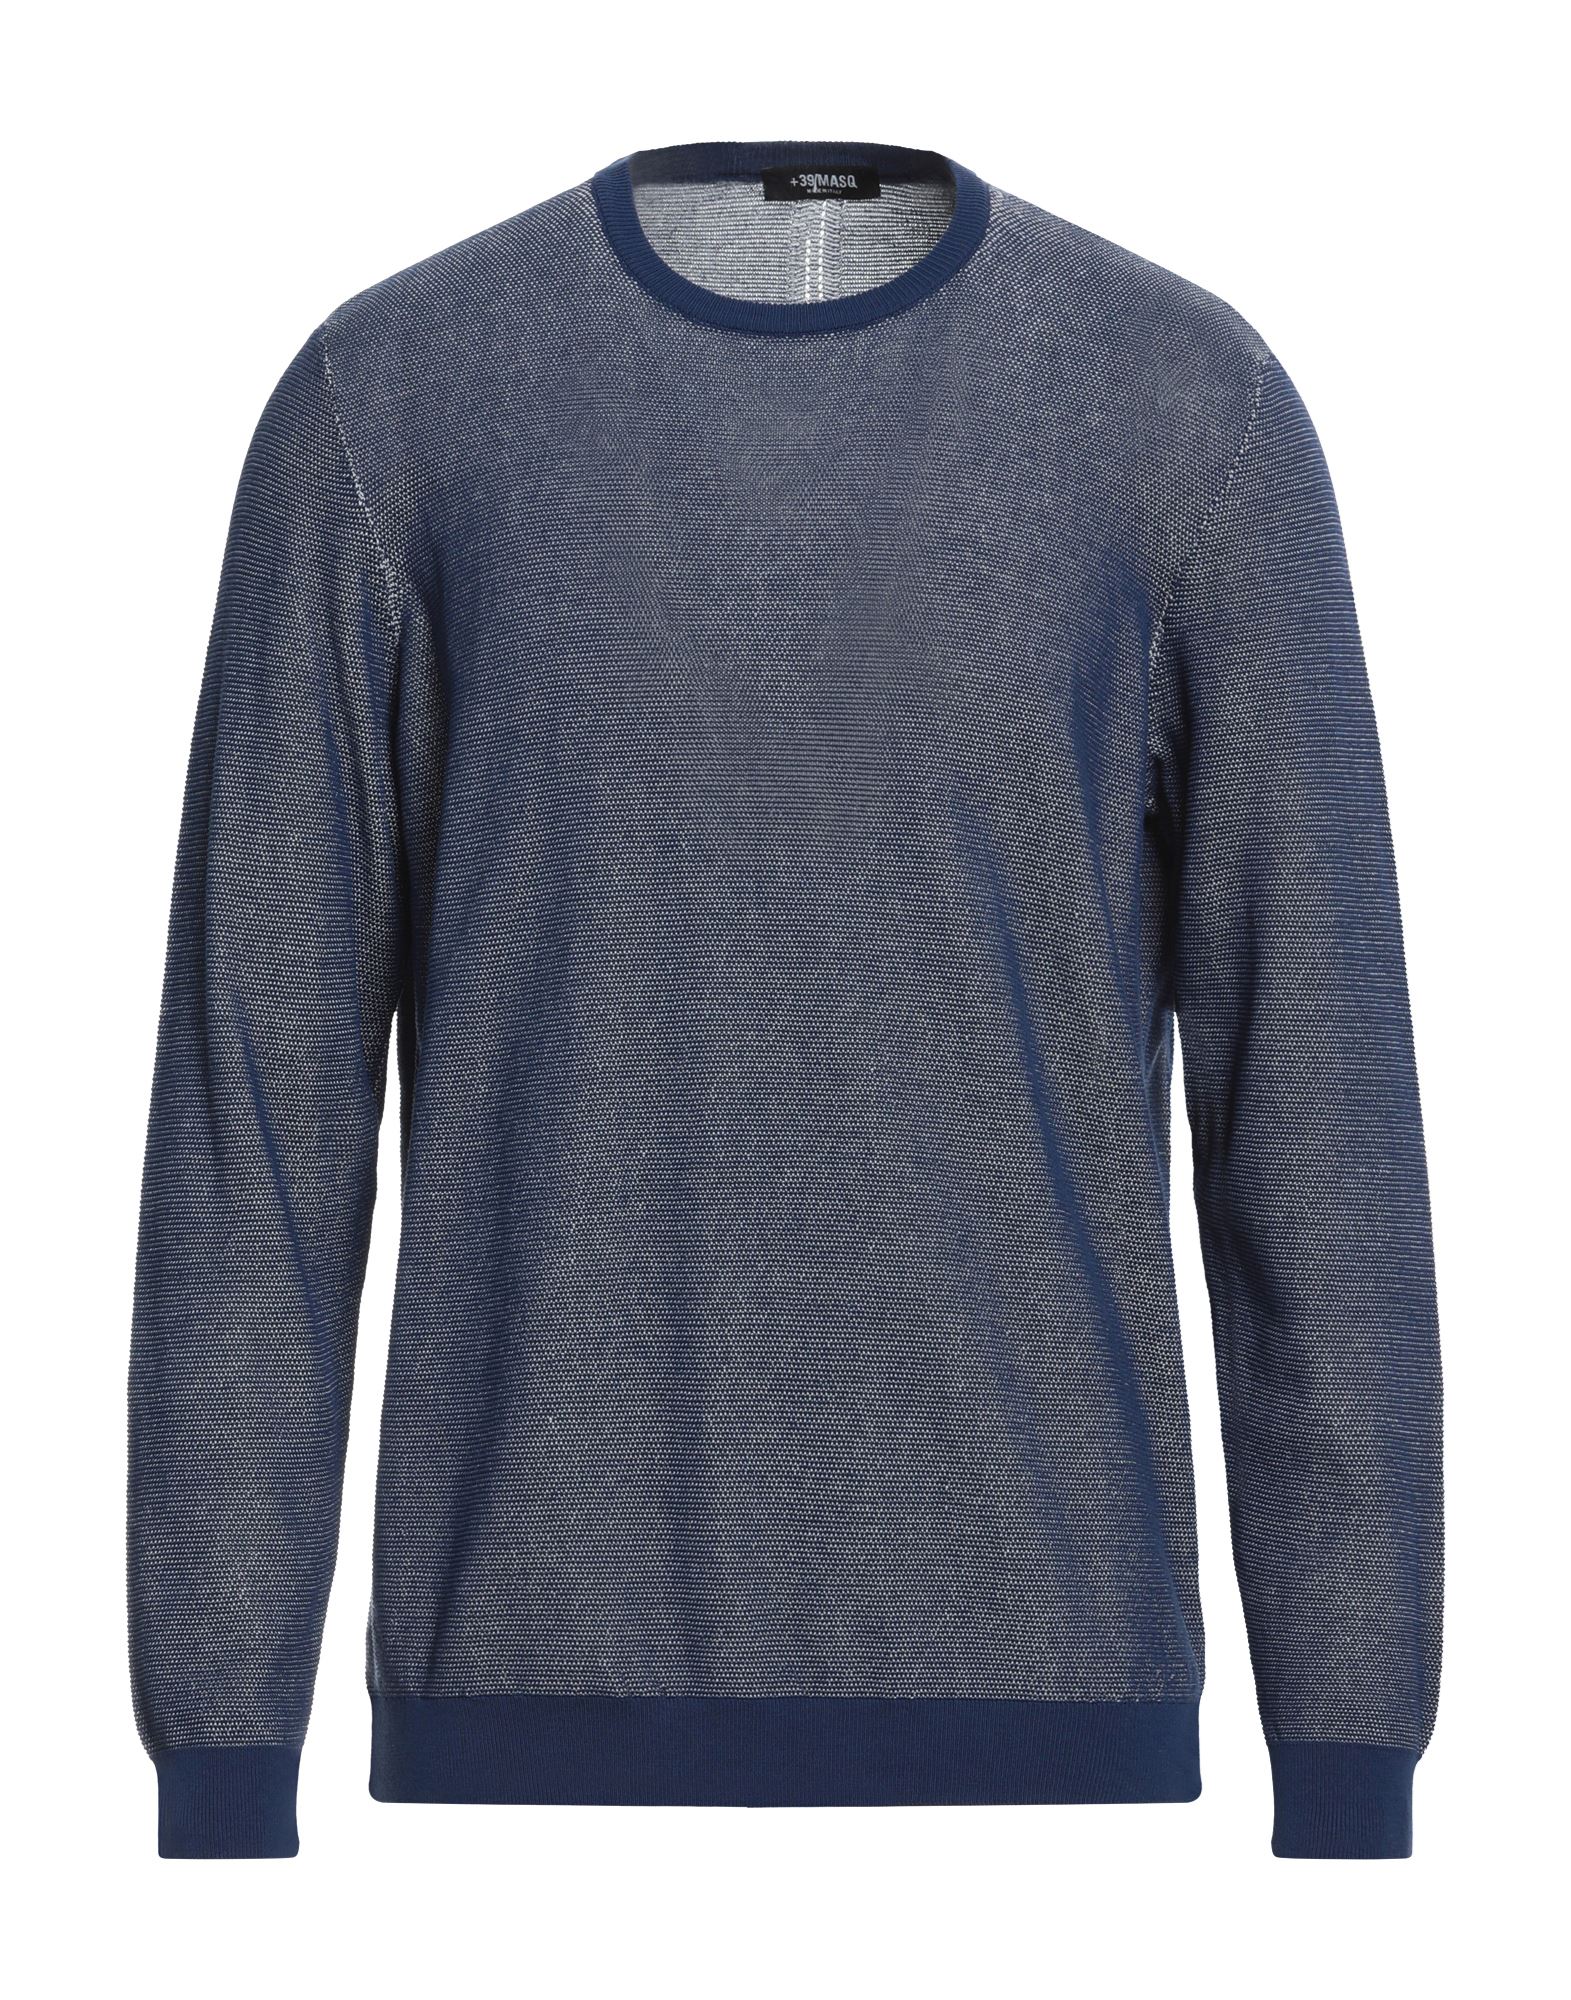 +39 Masq Man Sweater Blue Size Xxl Cotton